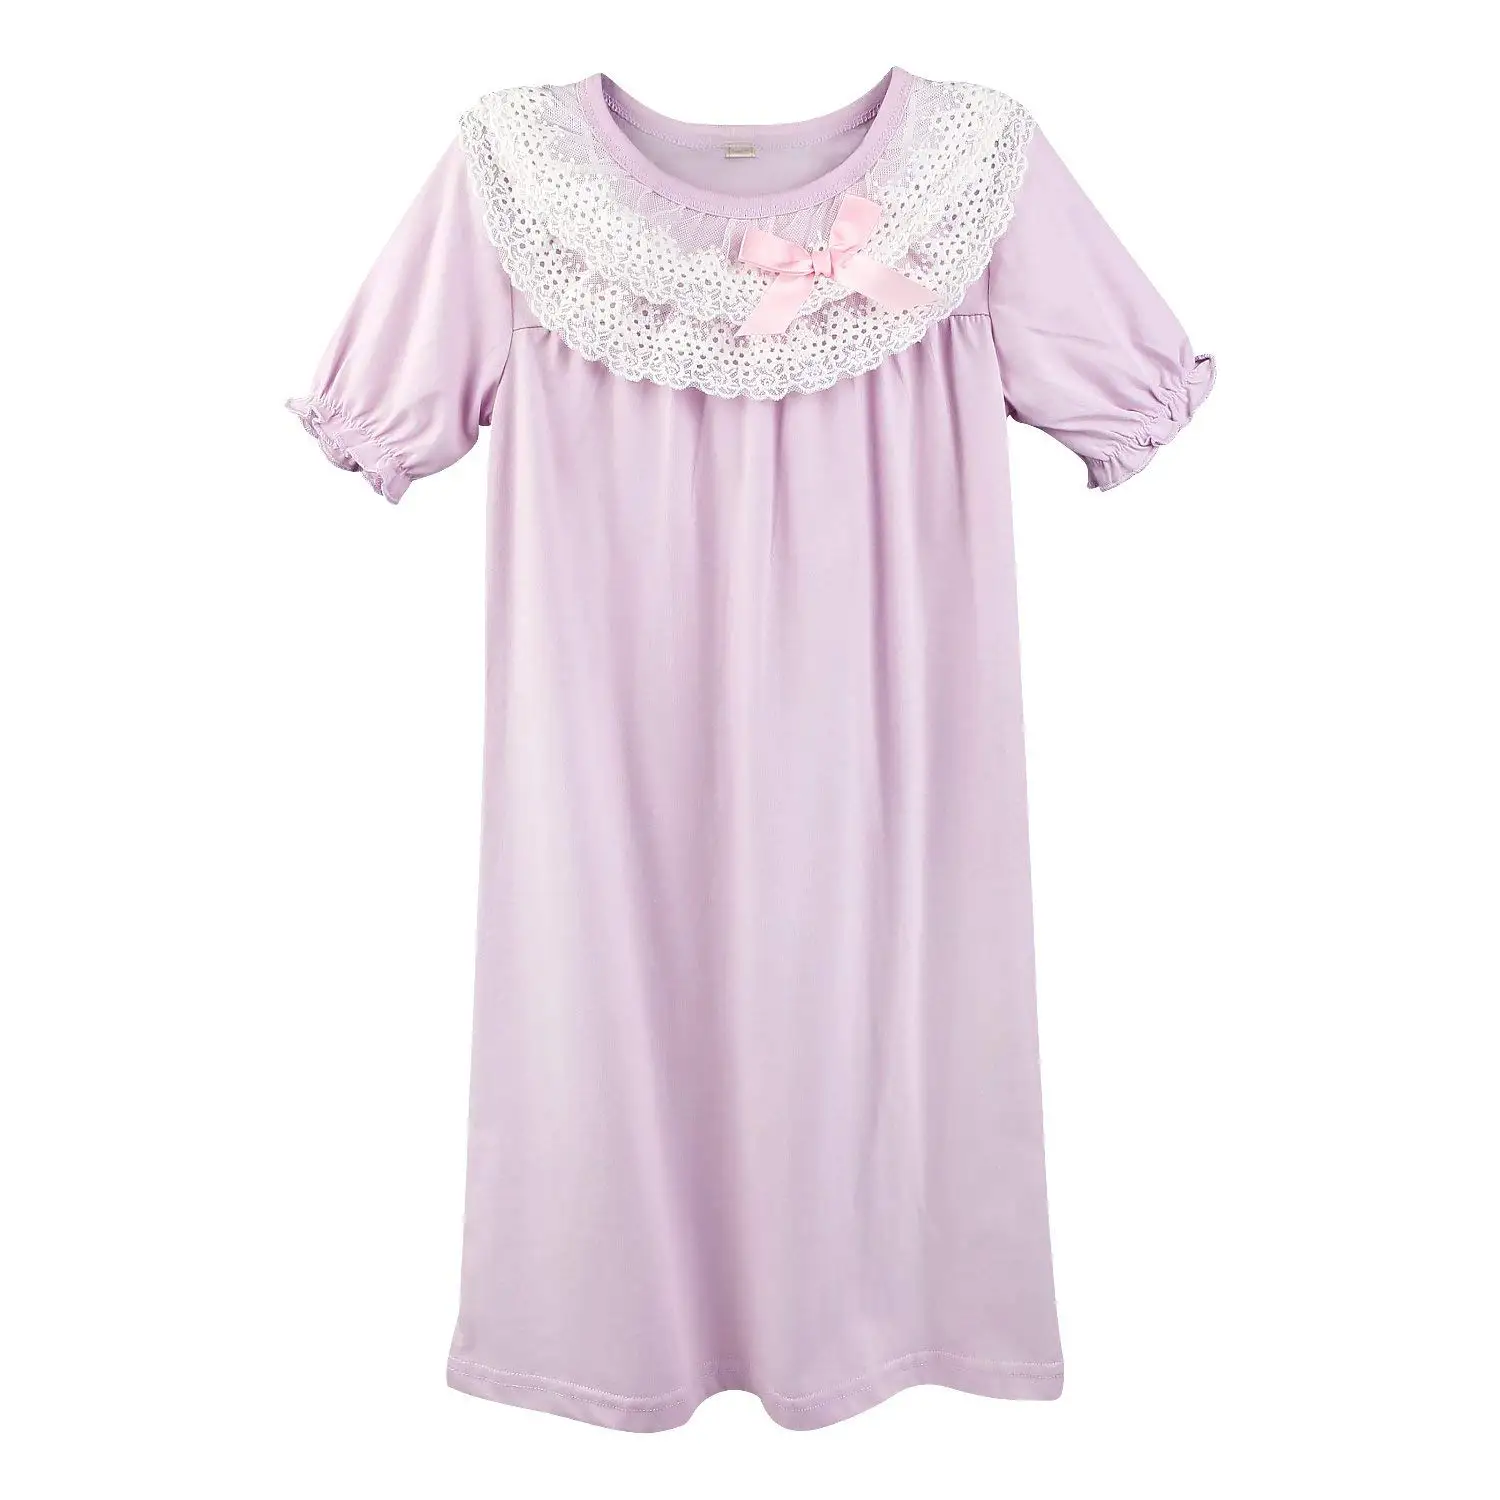 BOOPH Girls Nightgown Toddler Sleep Dress Princess Nightwear for Girl 3-12 Year